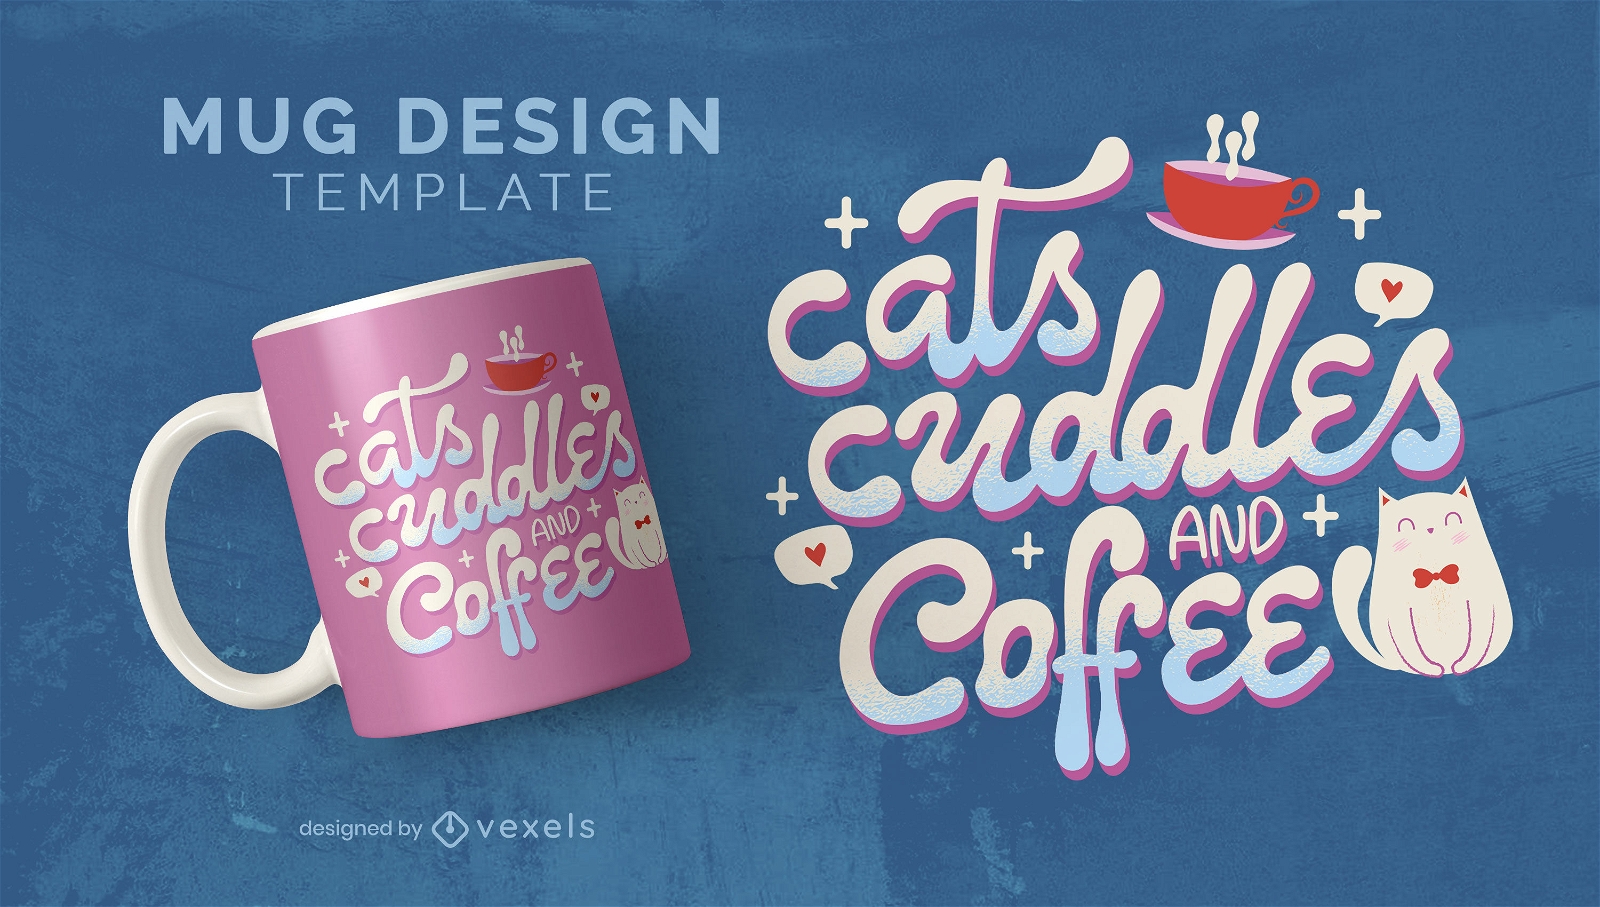 Cuddles and coffee mug design